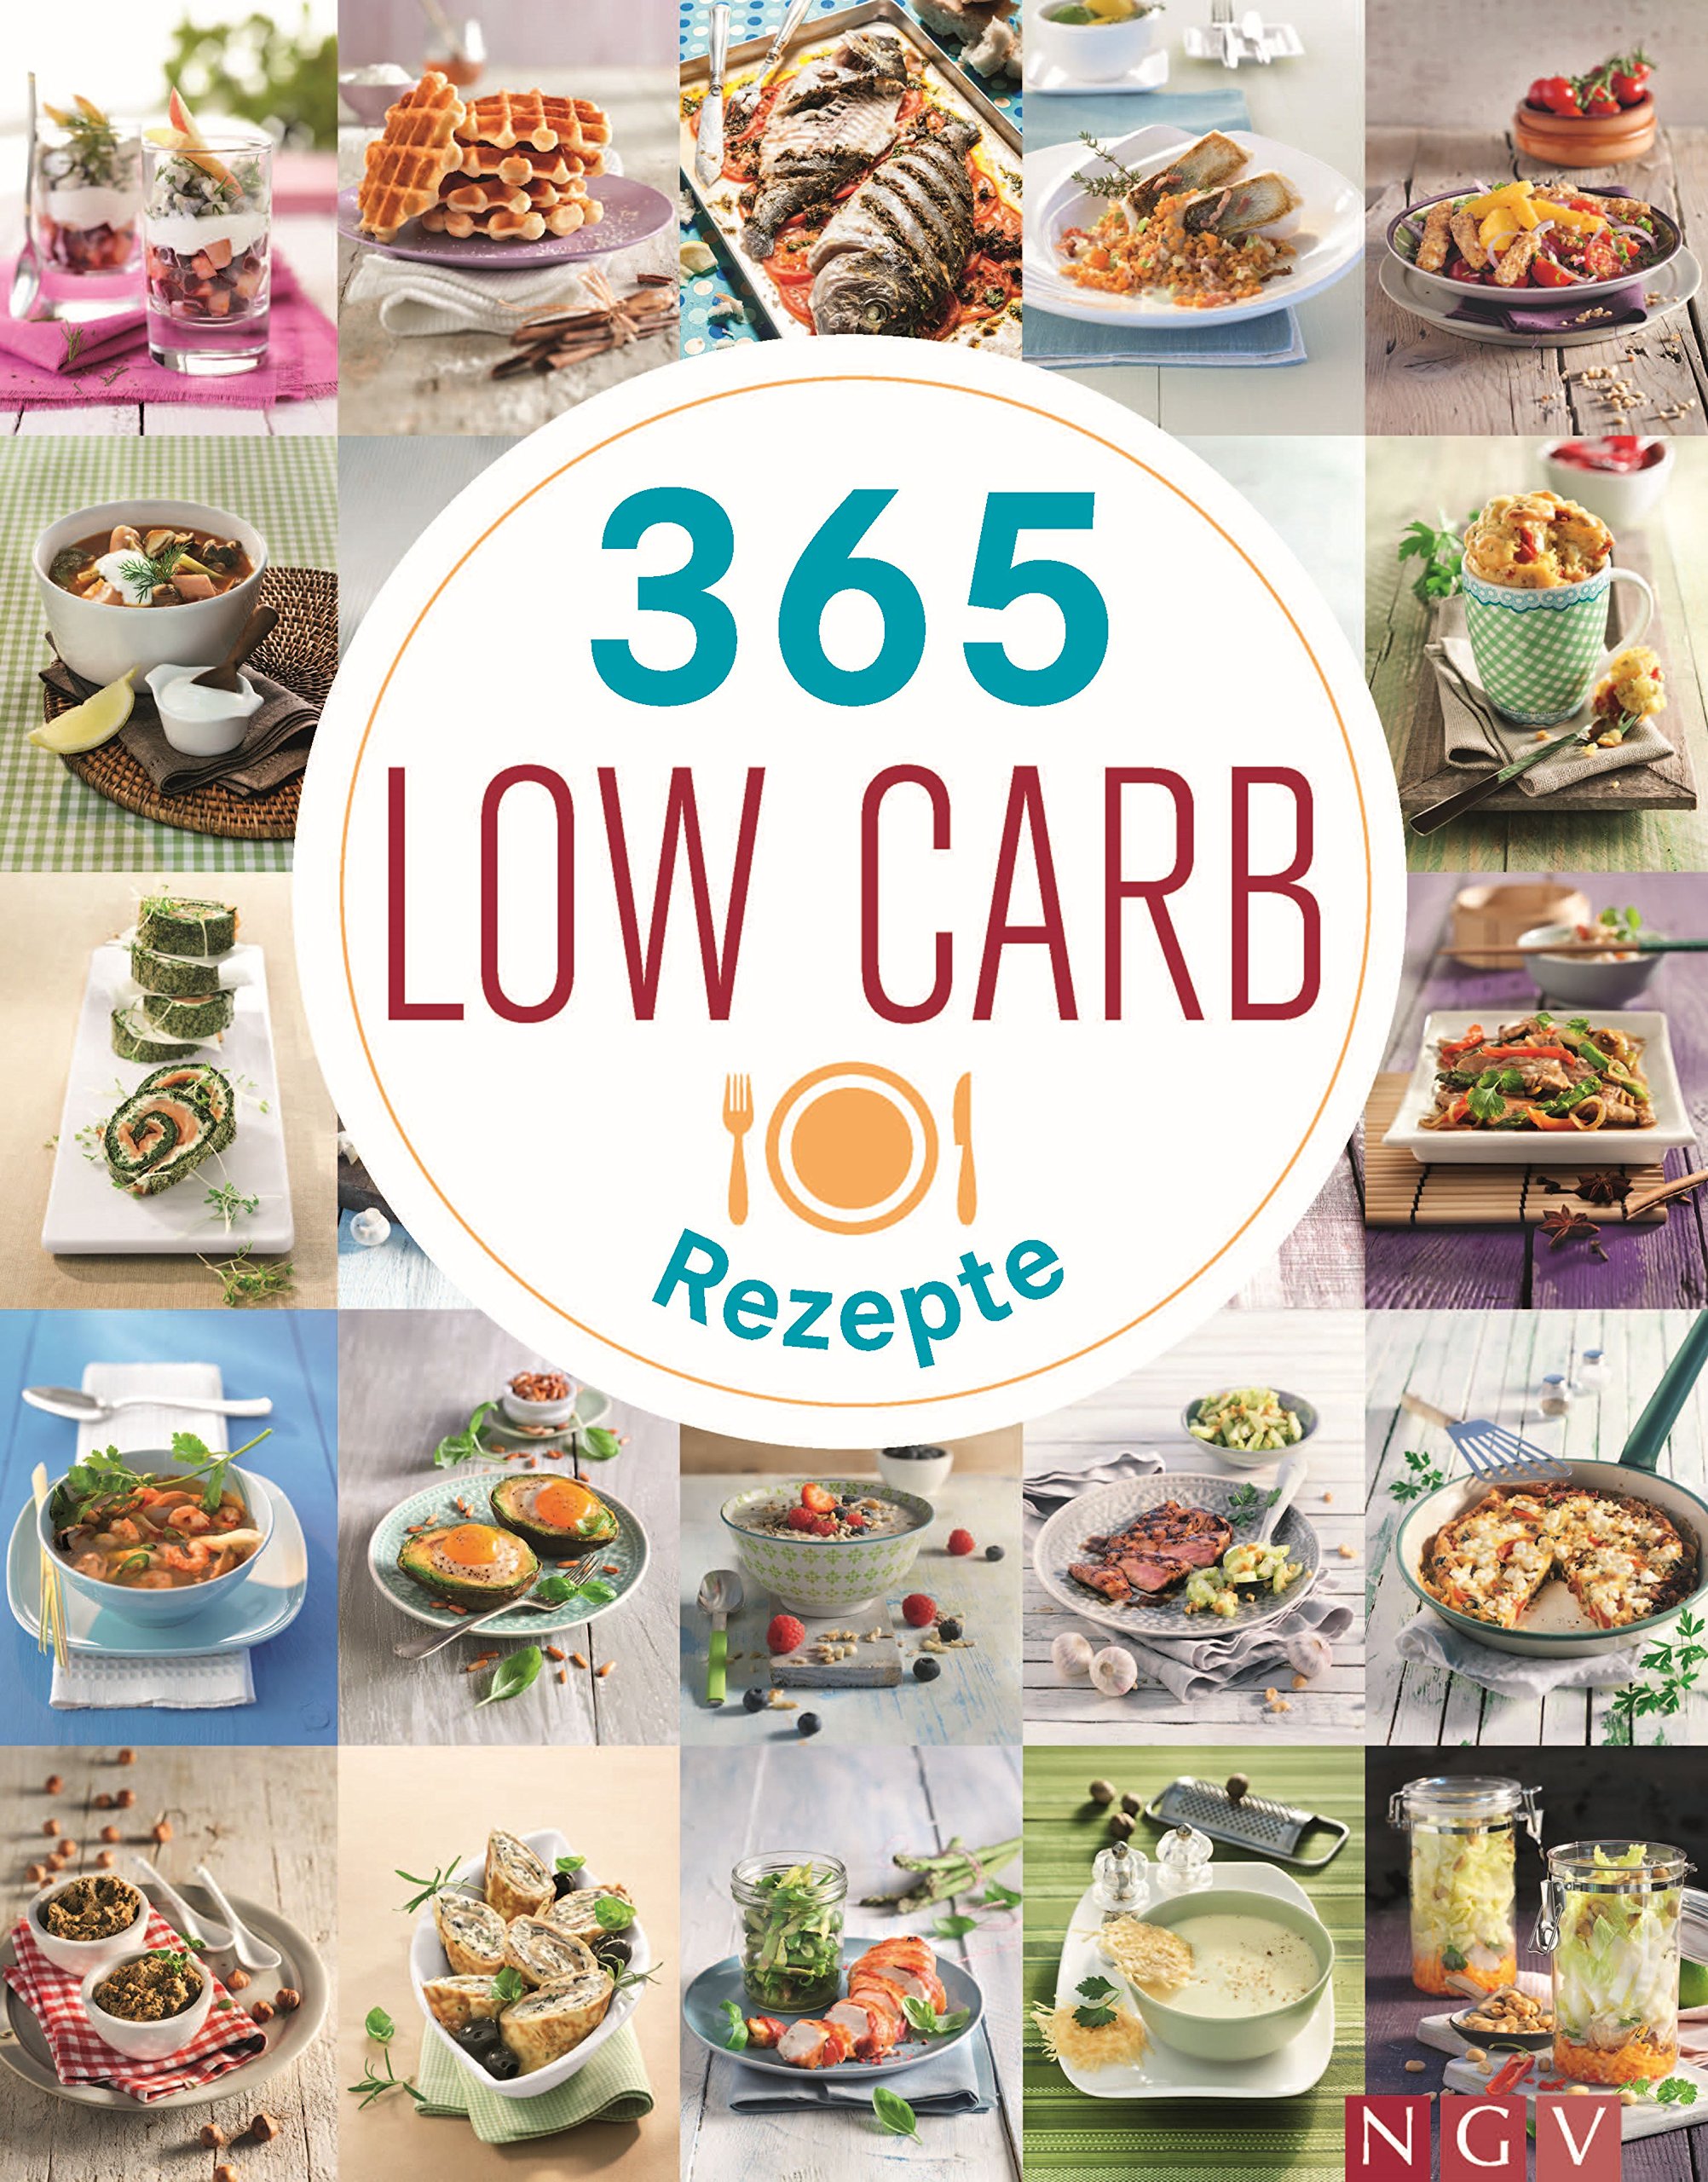 365 Low-Carb-Rezepte: Low Carb Rezepte für ein ganzes Jahr (German Edition)